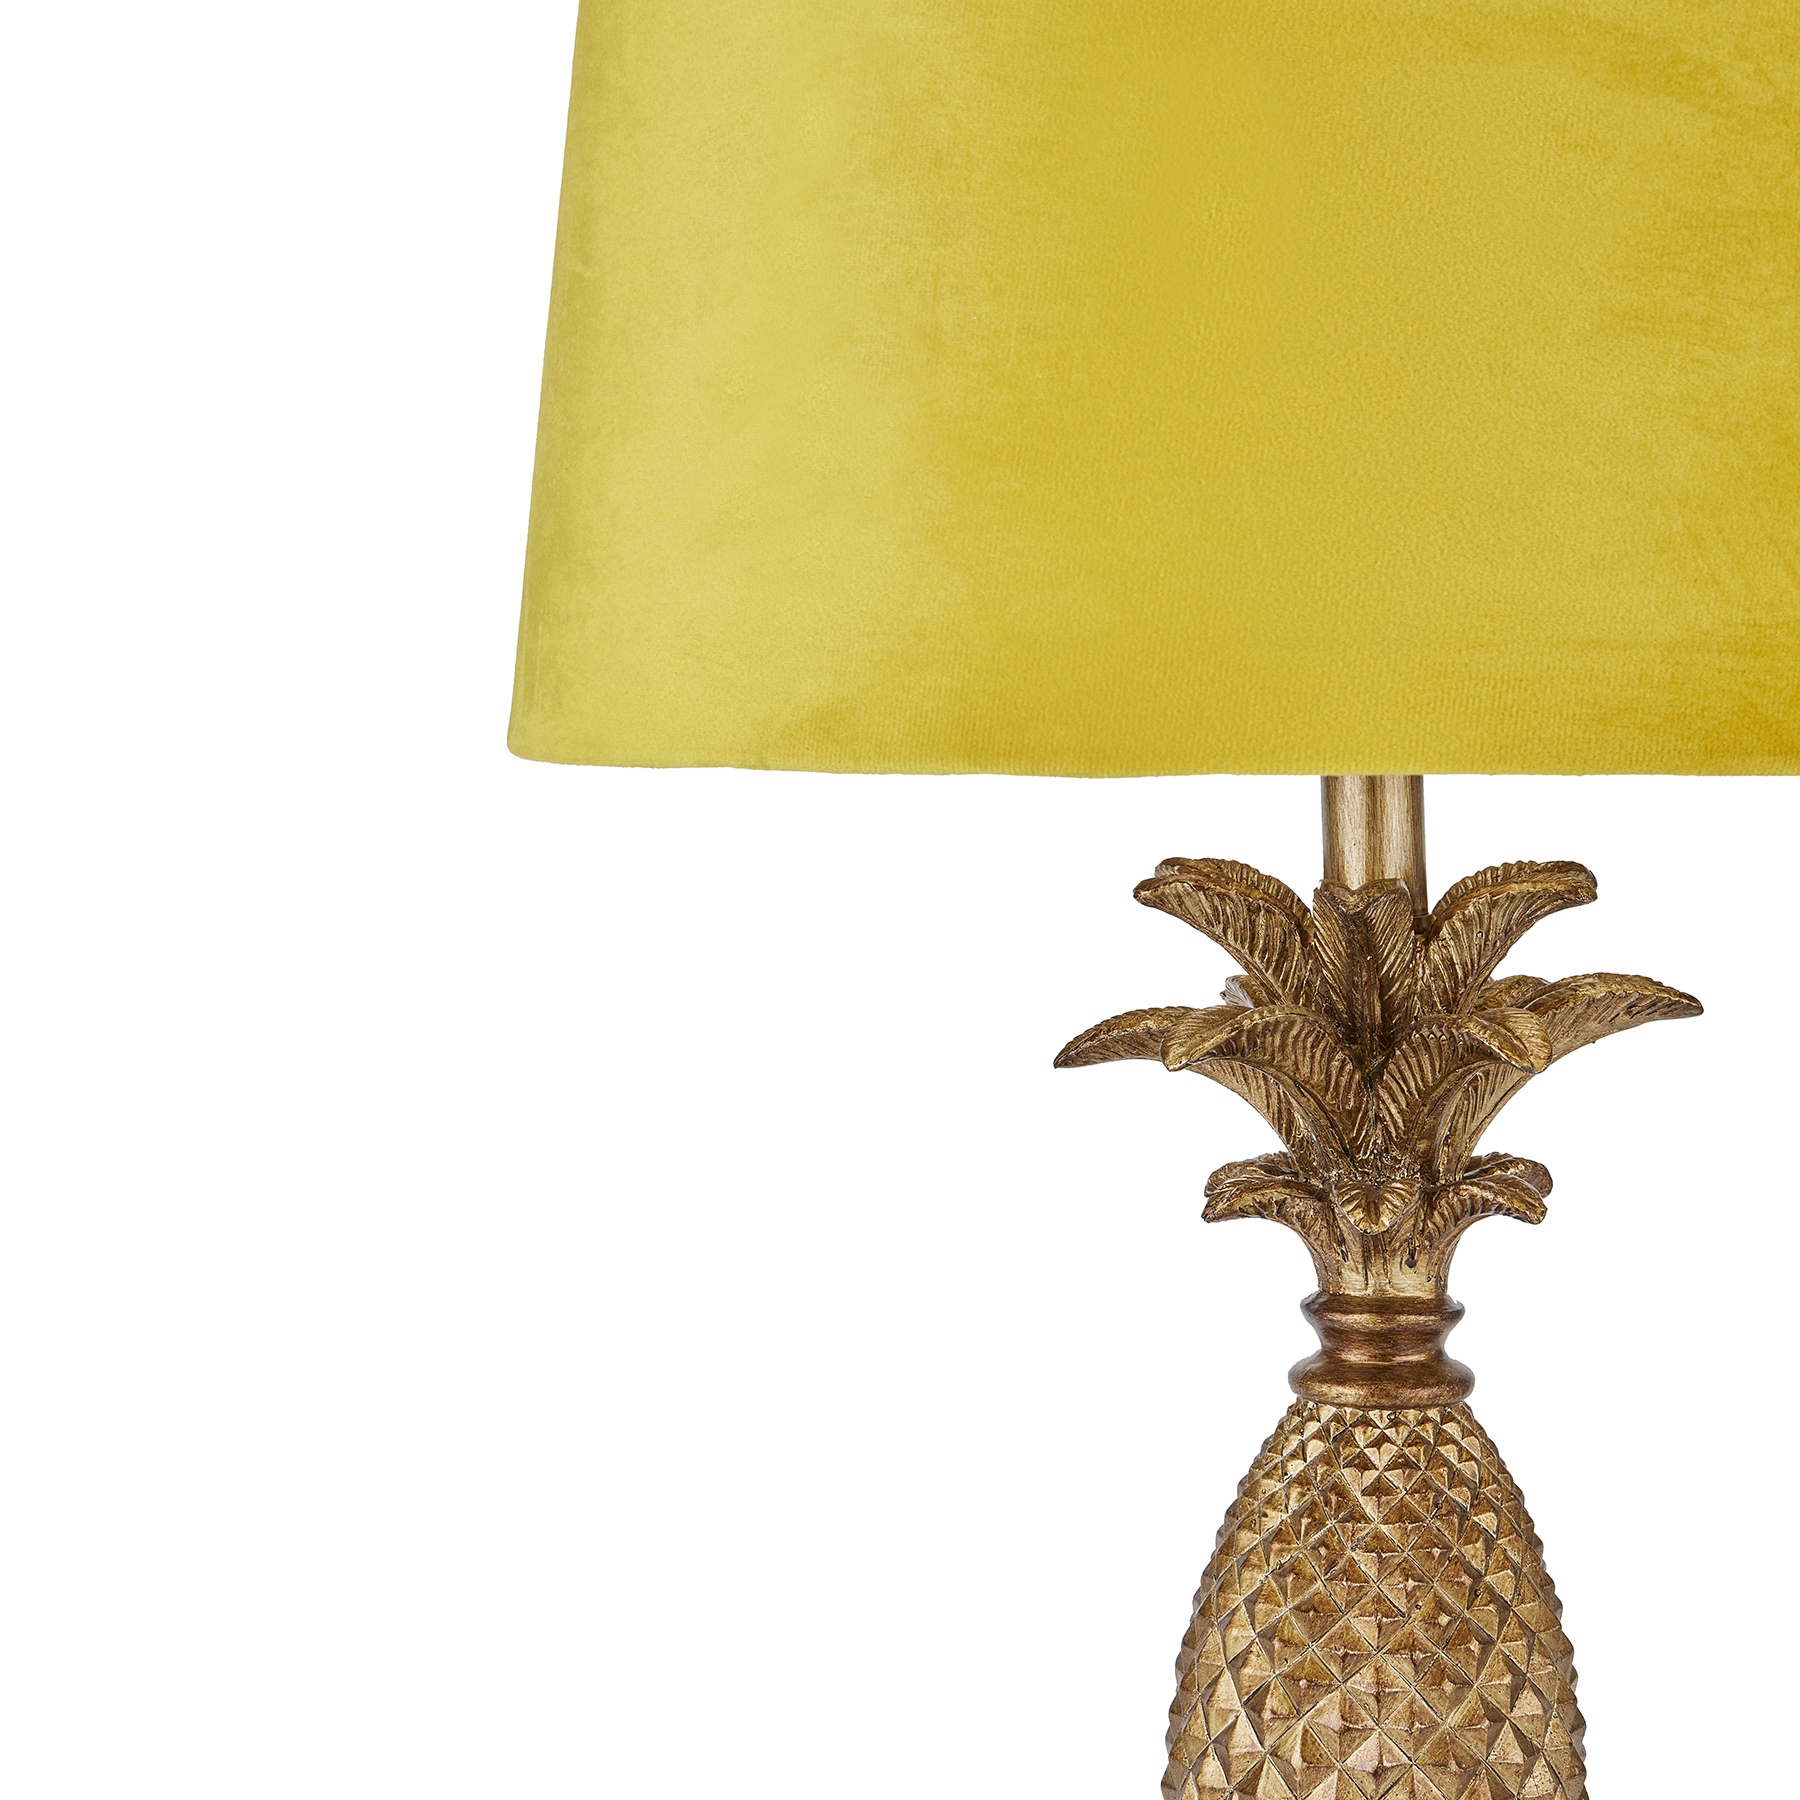 Tall Gold Pineapple Lamp With Mustard Velvet Shade - Image 2